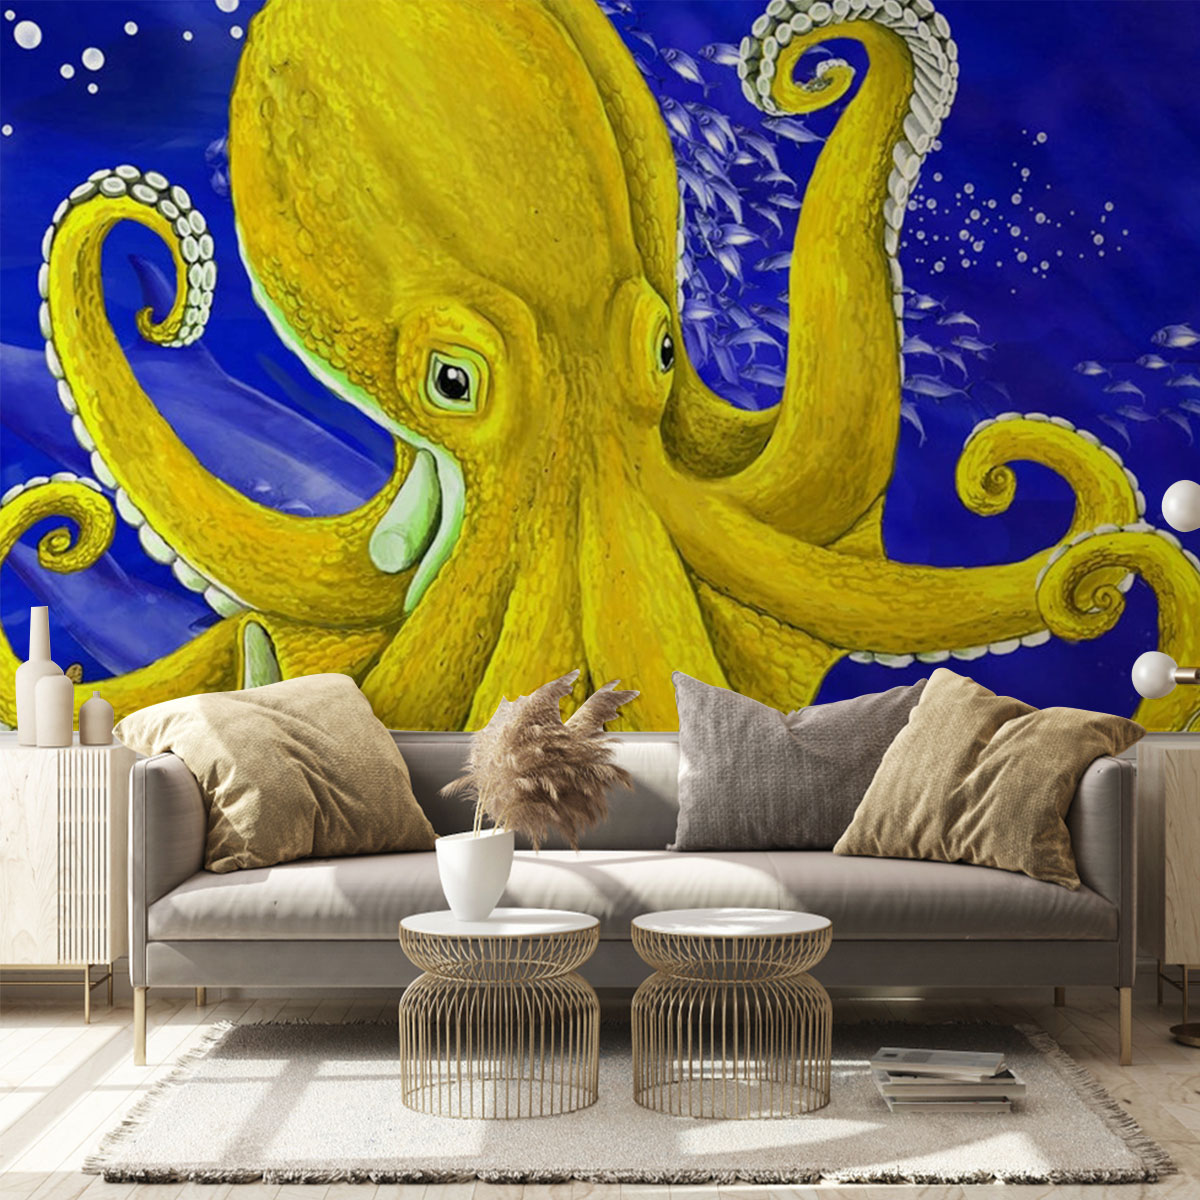 Yellow Octopus Wall Mural_1_2.1